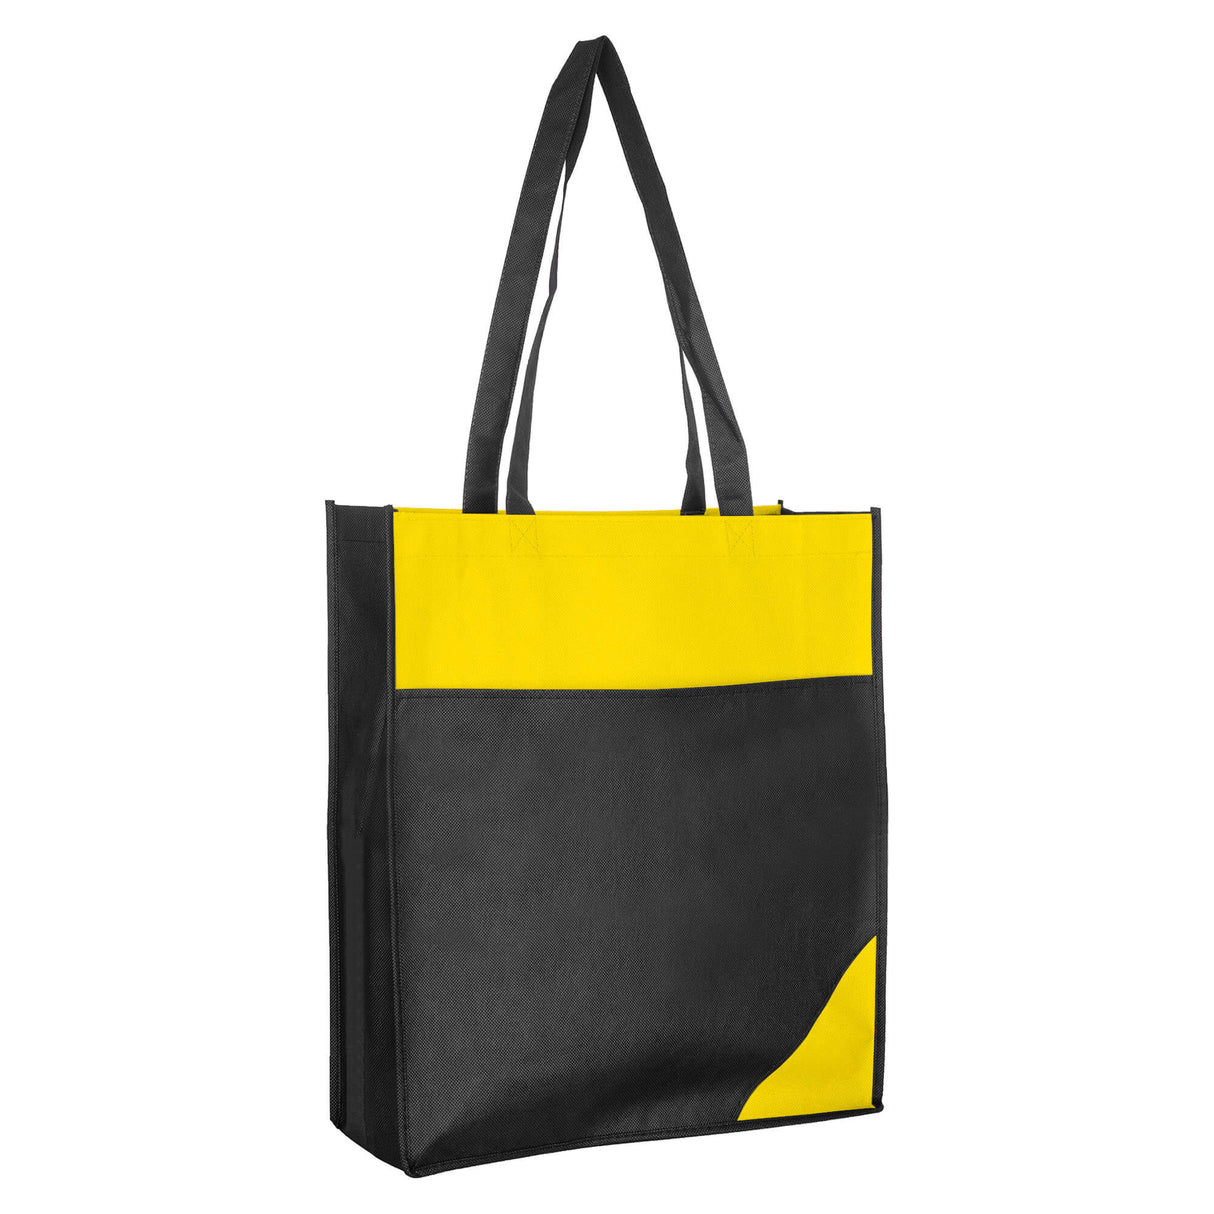 Savvy Shopper Bag - Printed